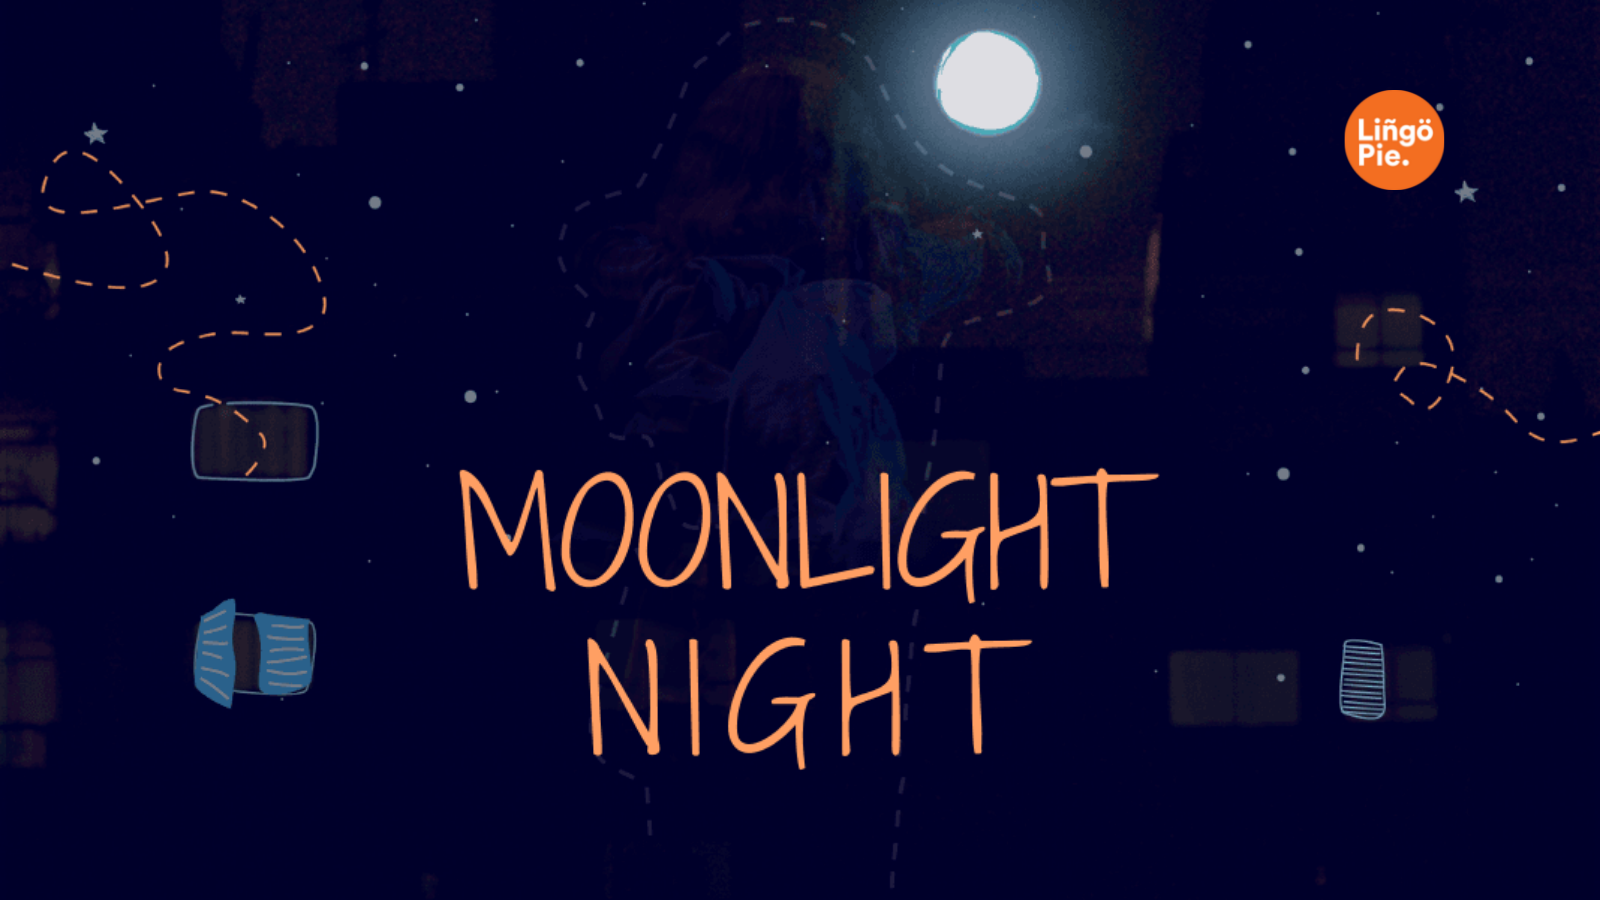 Moonlight Night on Lingopie.